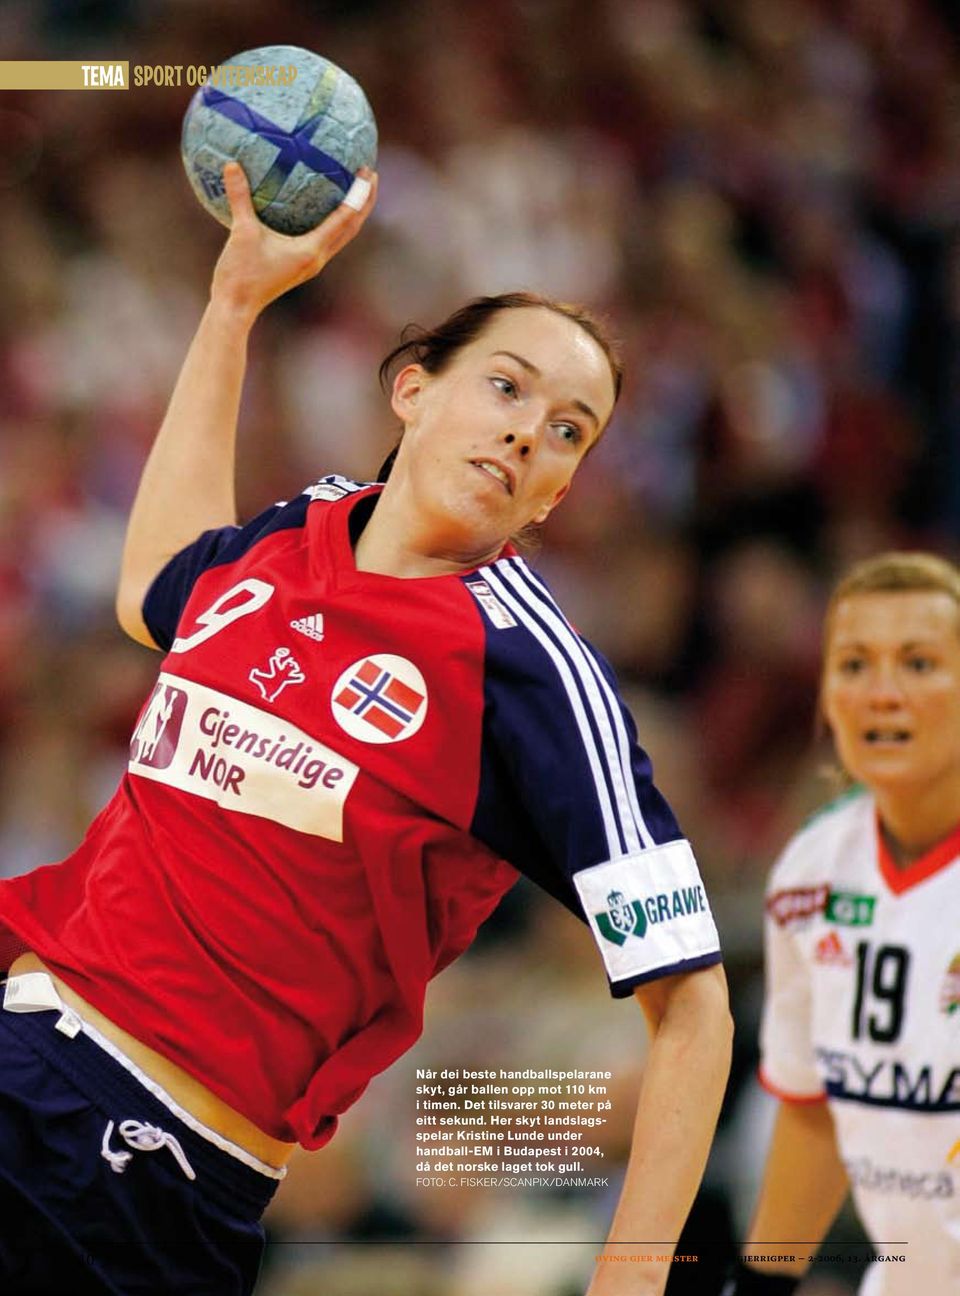 Her skyt landslagsspelar Kristine Lunde under handball-em i Budapest i 2004, då